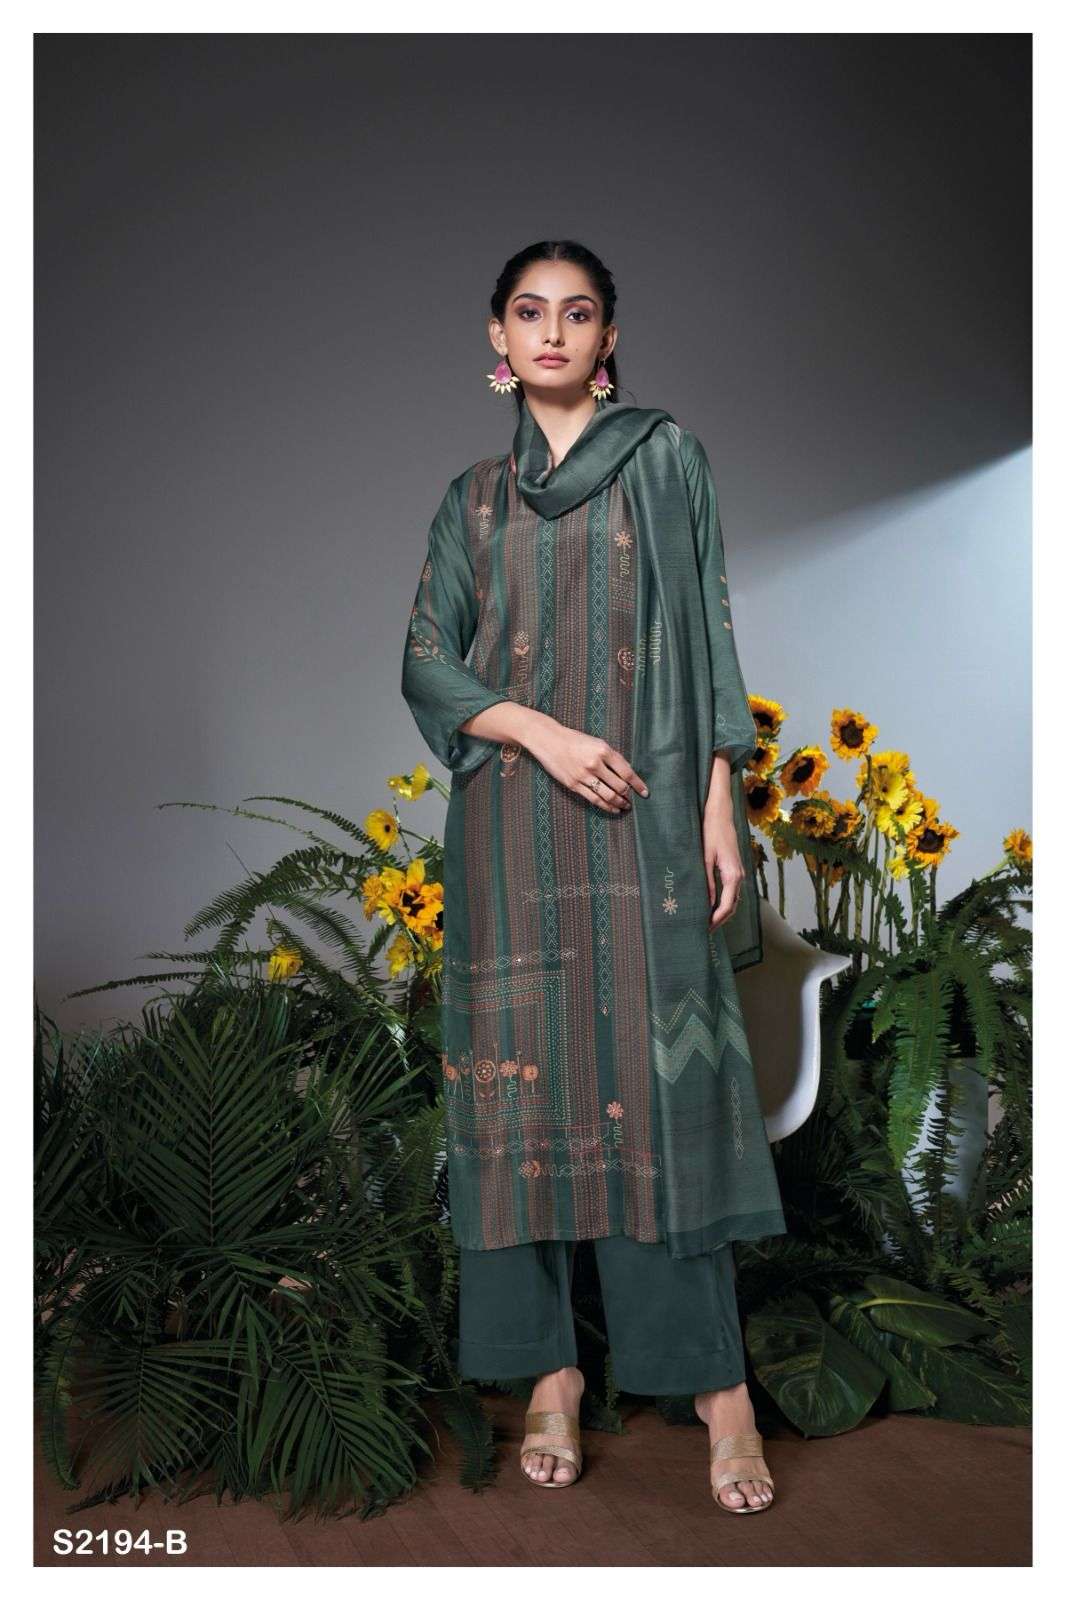 ganga agarsha 2194 colour  series designer wedding wear salwar kameez at wholesaler rate surat gujarat